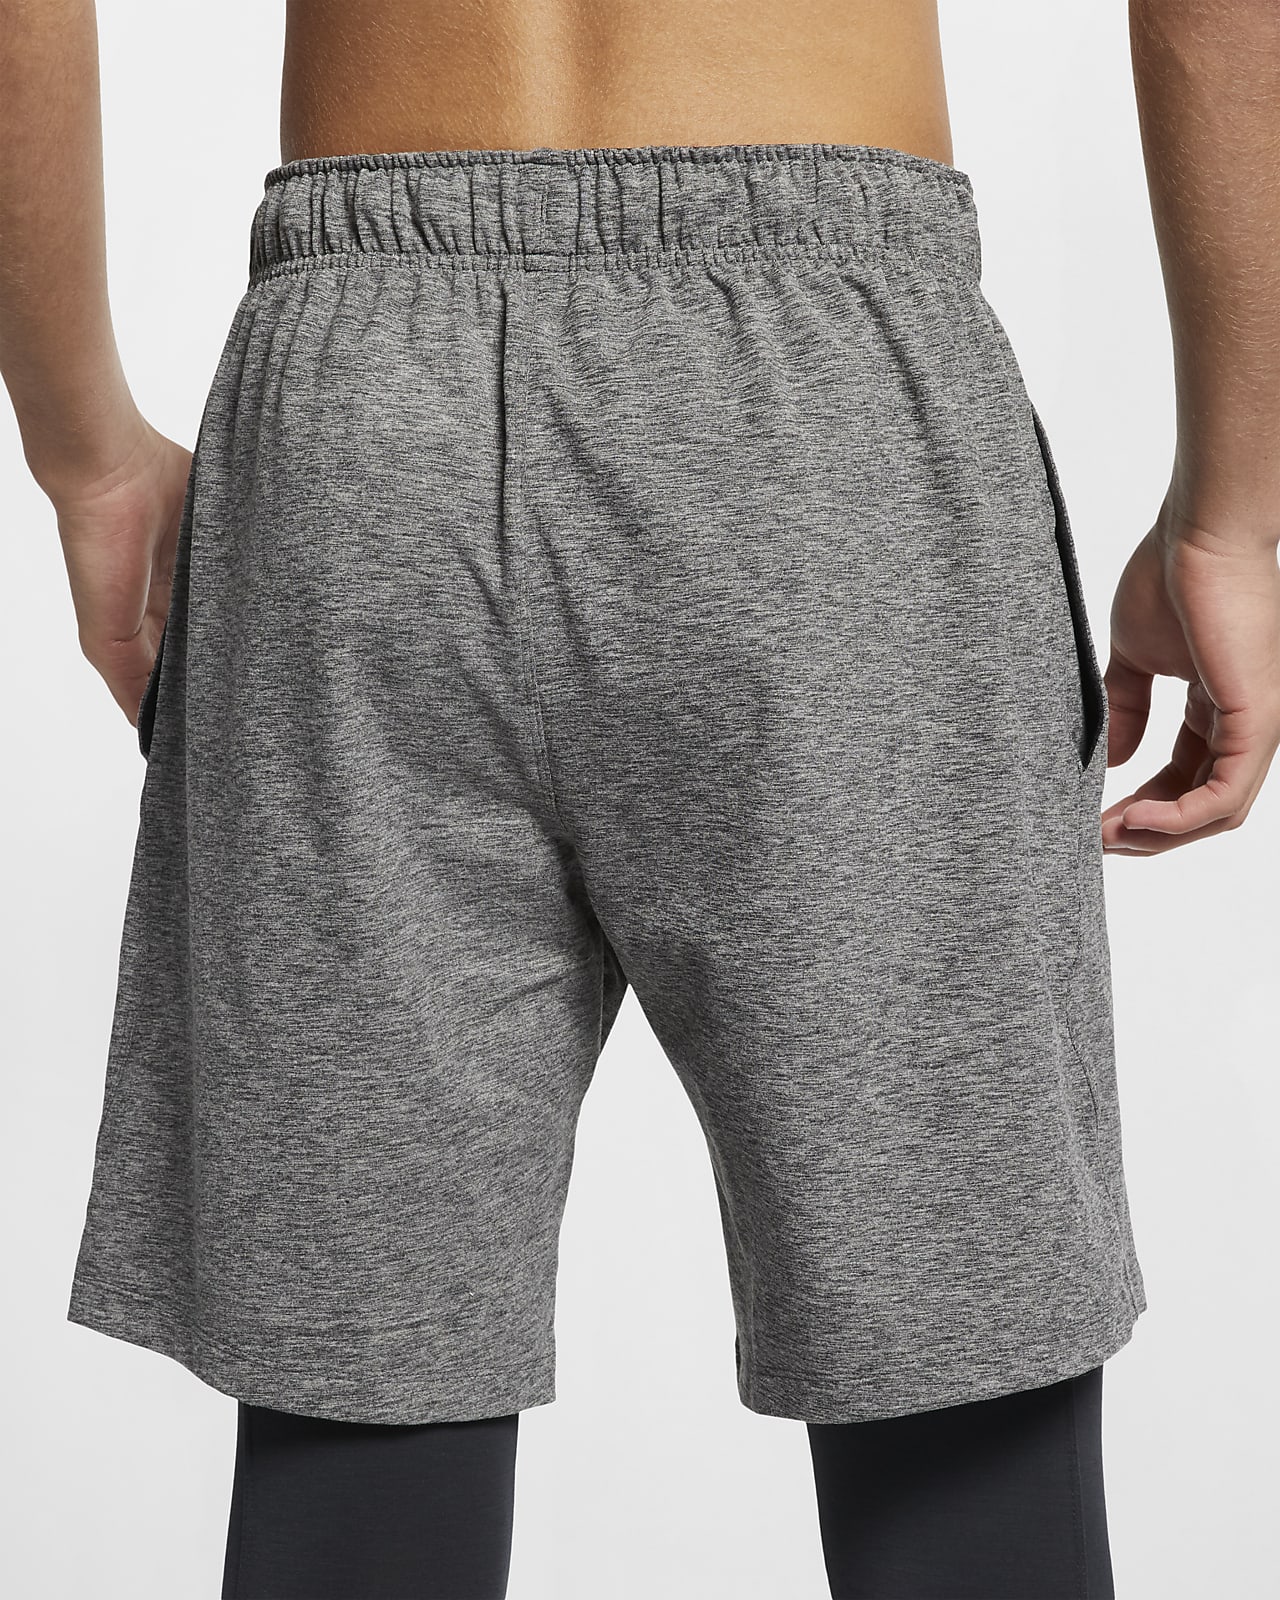 grey nike shorts dri fit